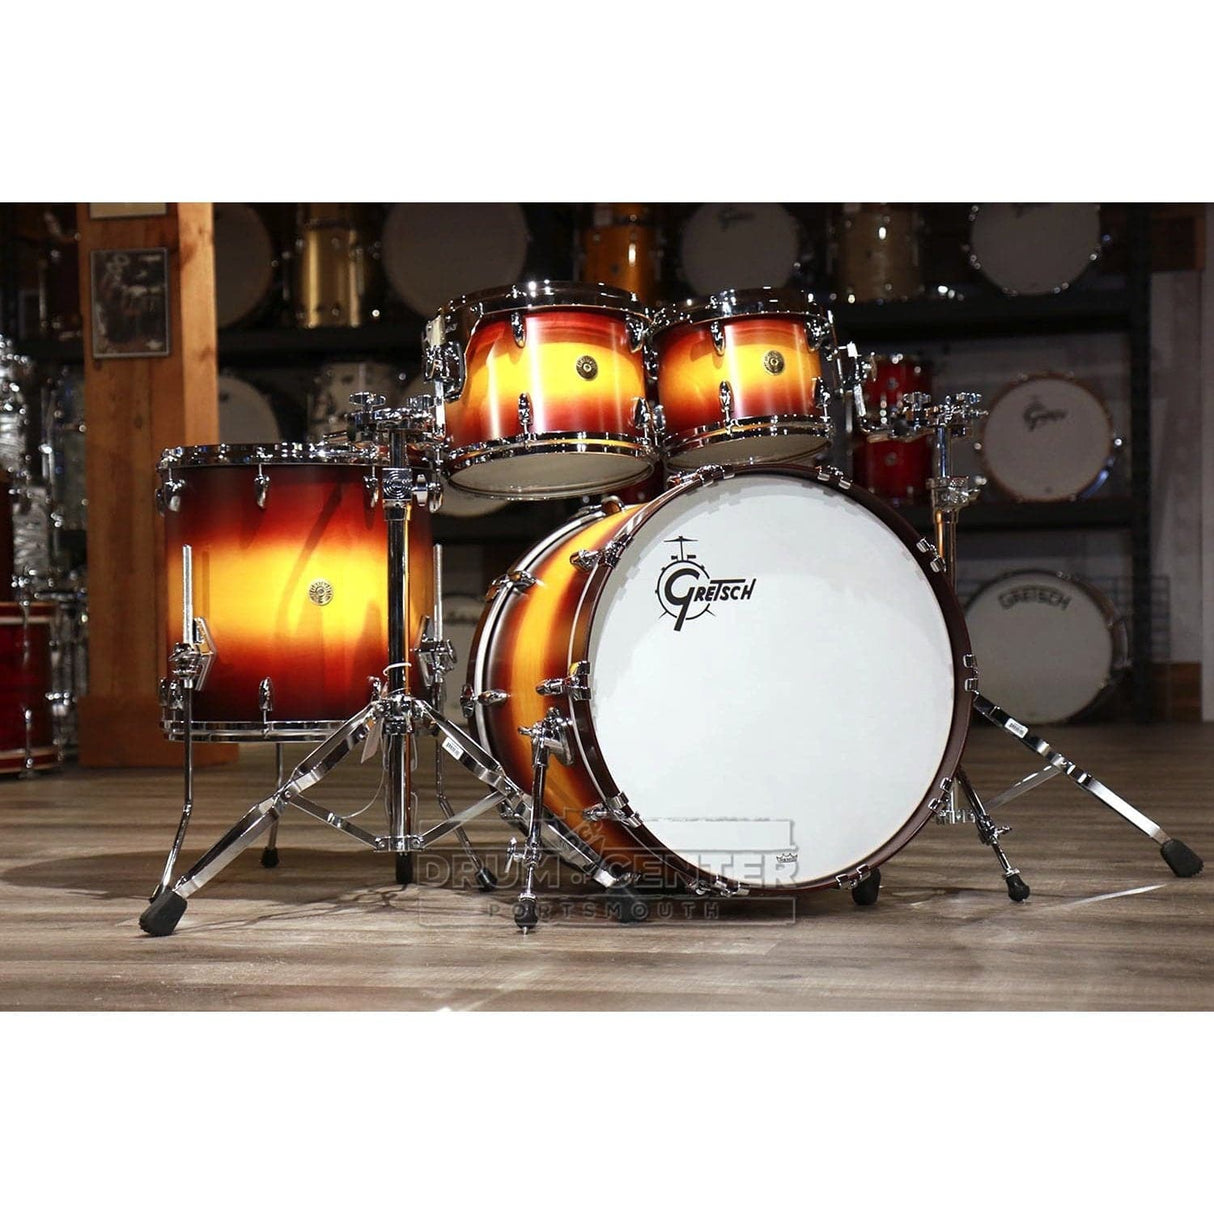 Gretsch USA Custom 4pc Drum Set Satin Amber Walnut Burst